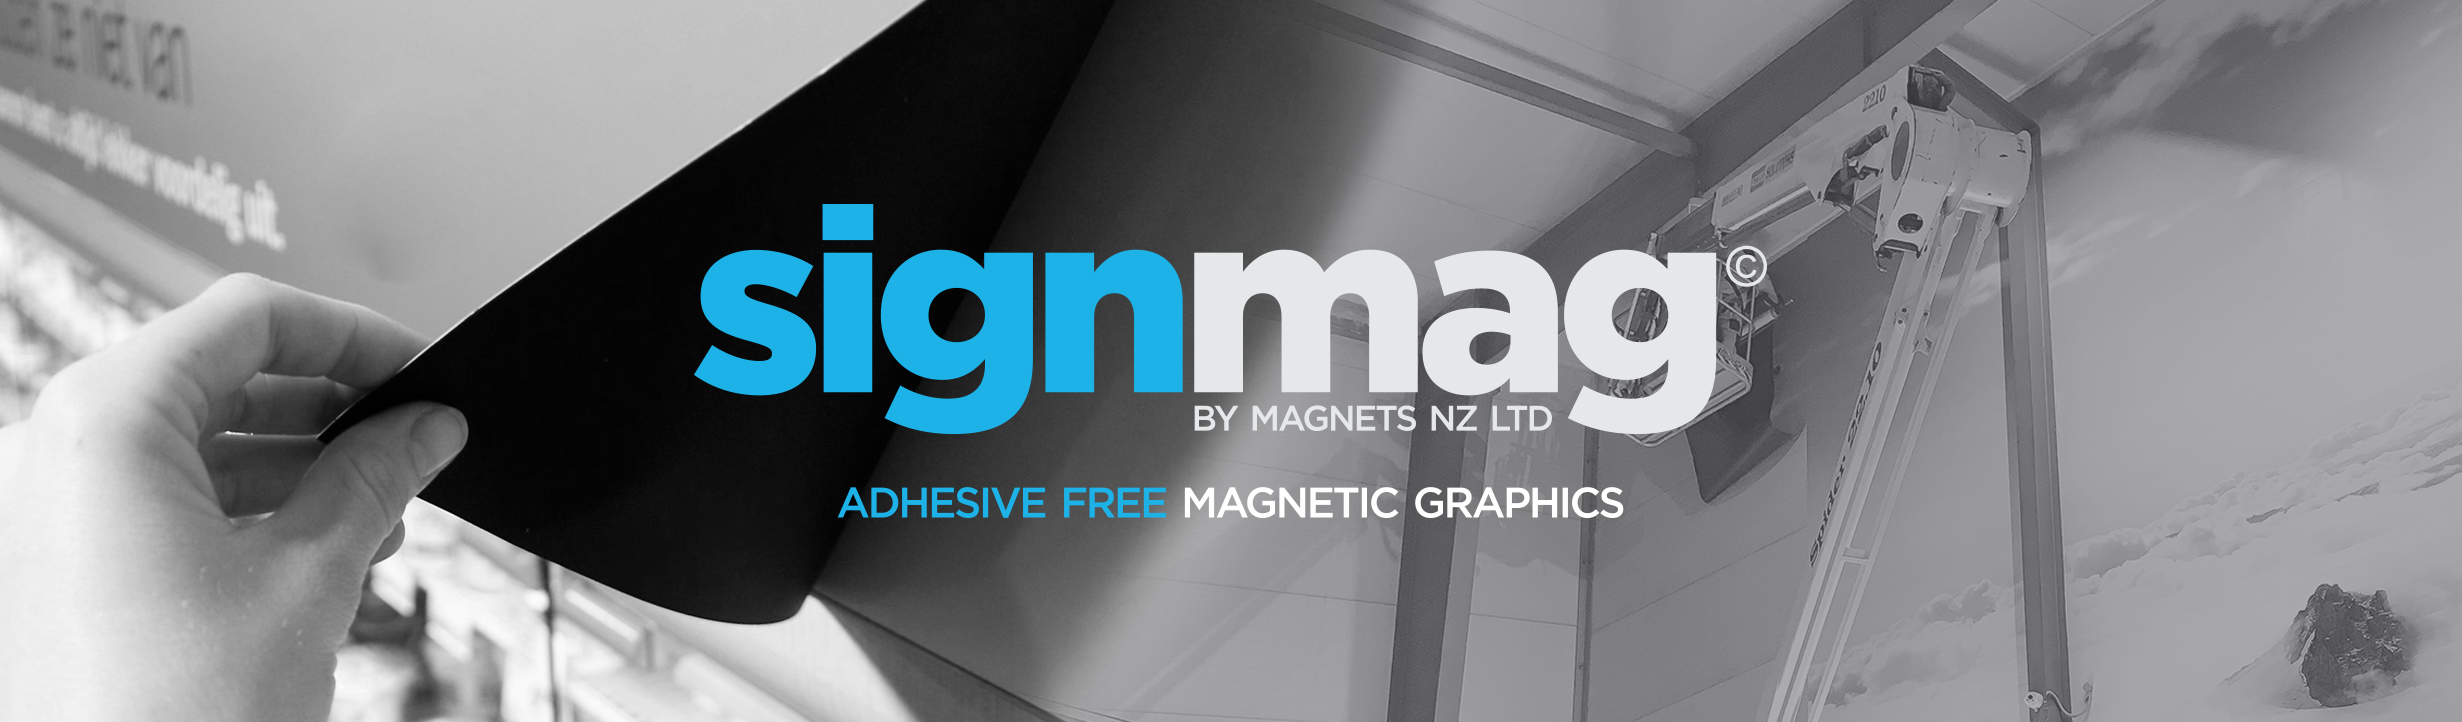 Wide Format Printable Magnet (SignMag)